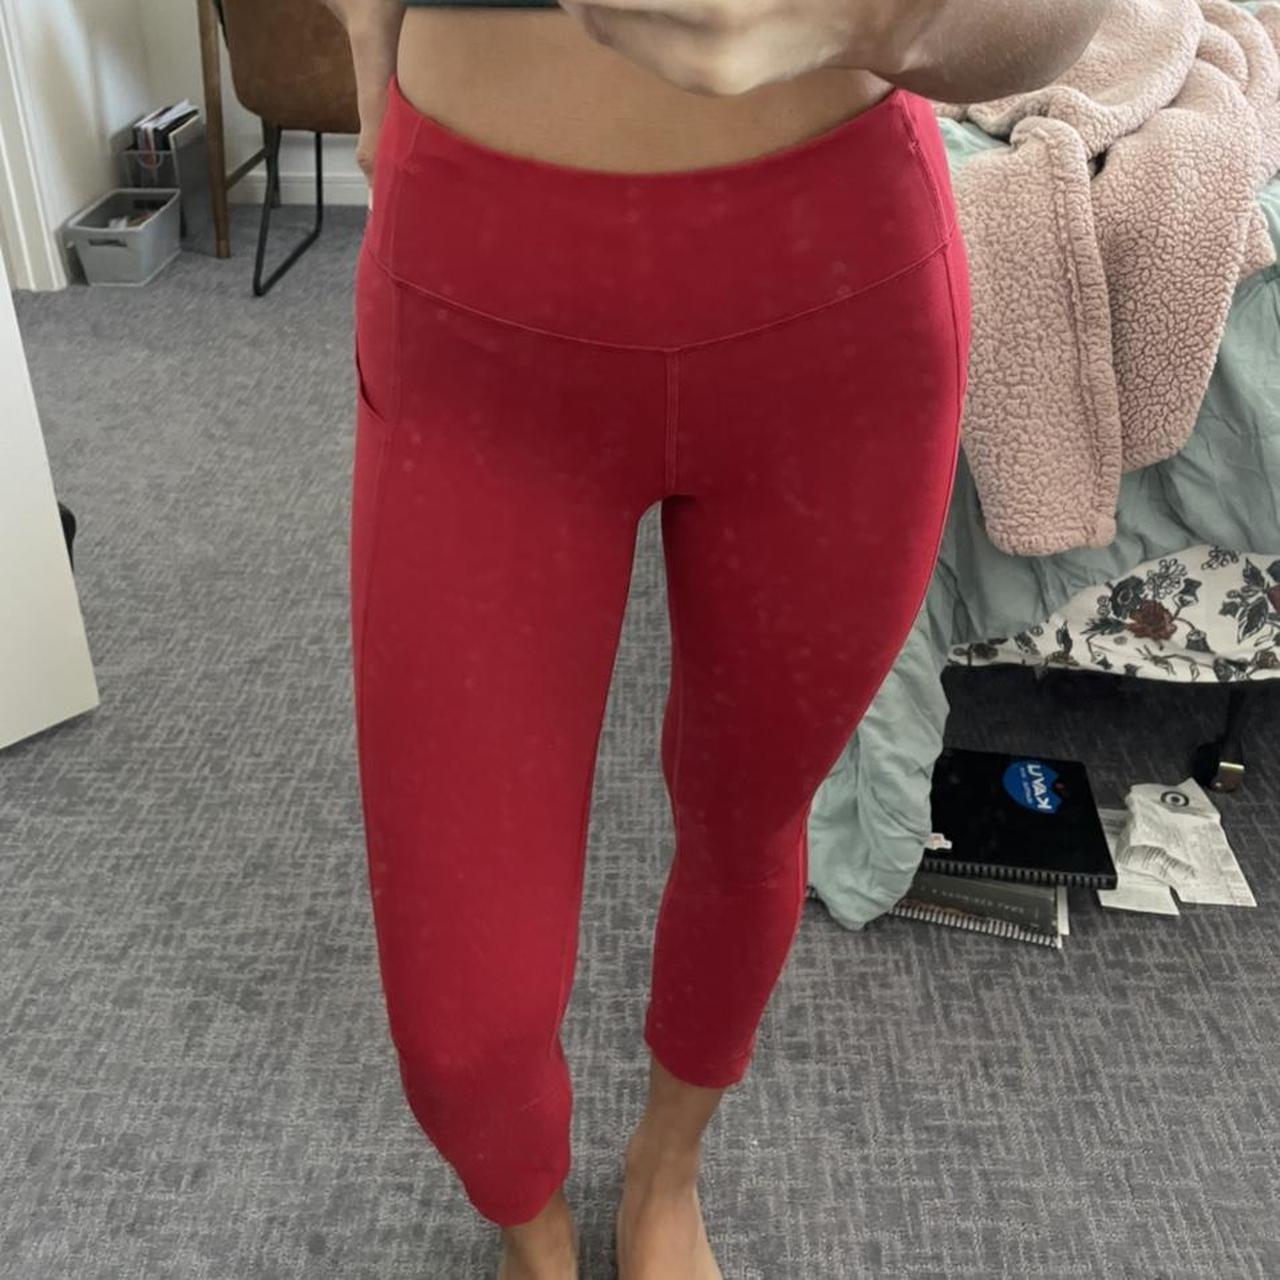 lululemon red crop legging with pocket and mesh